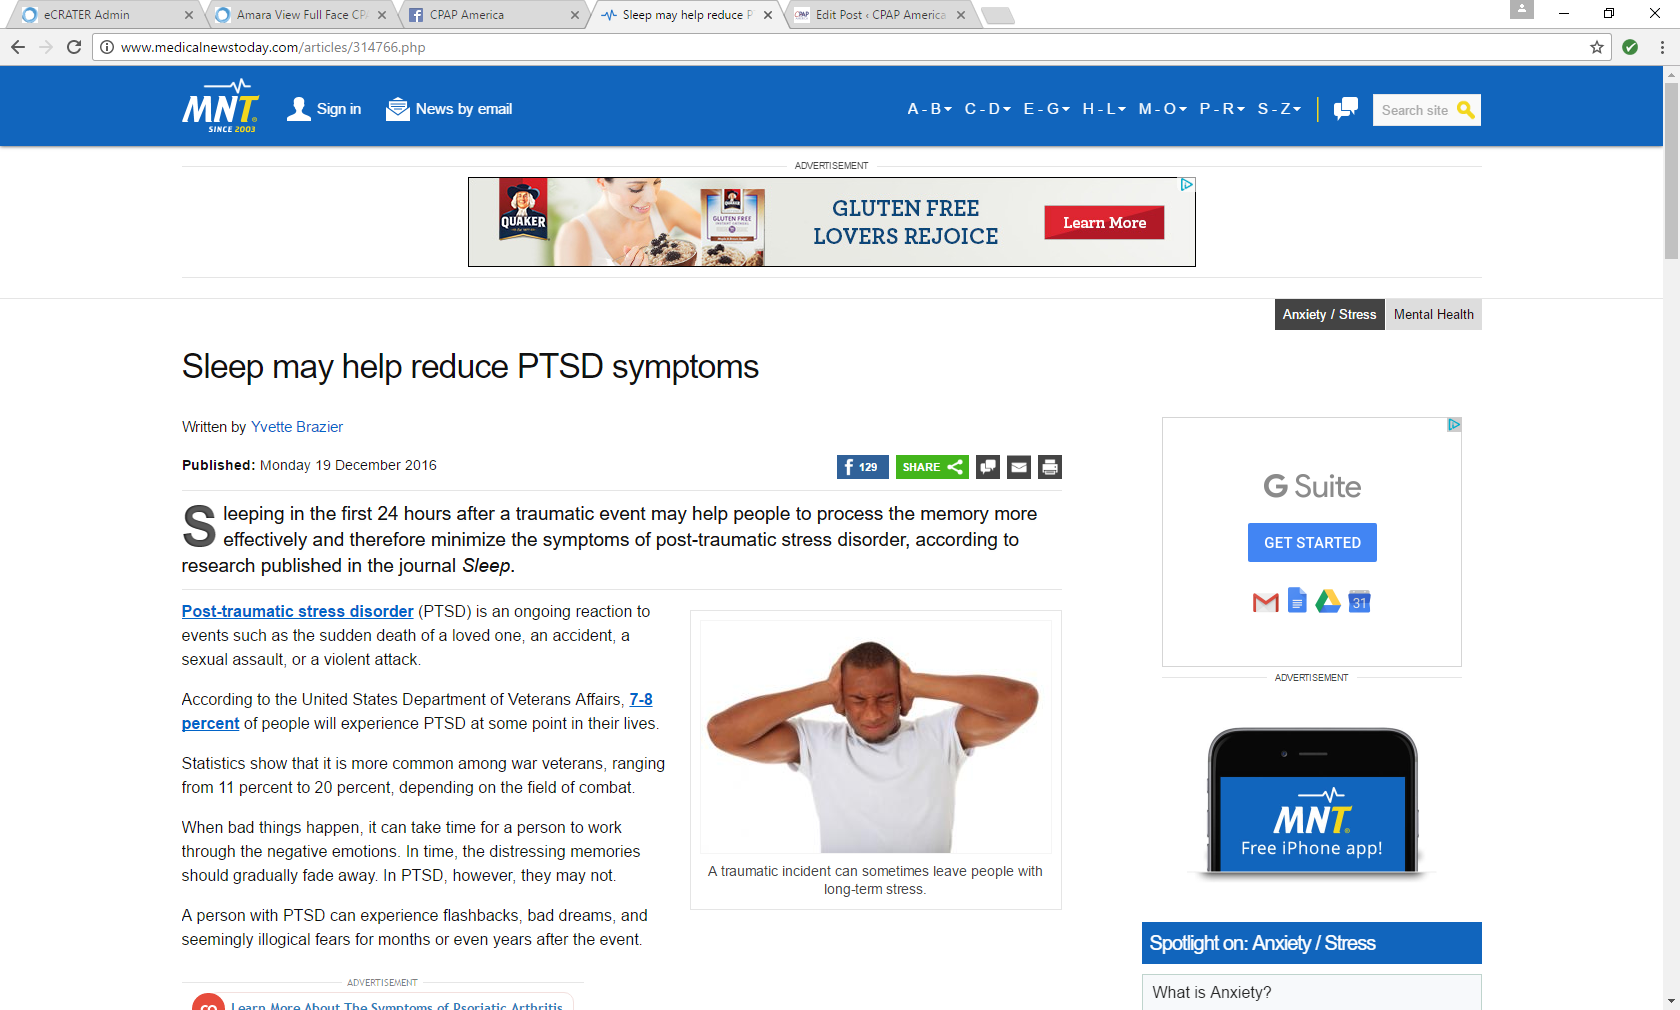 Can Sleep Help Reduce PTSD Symptoms?